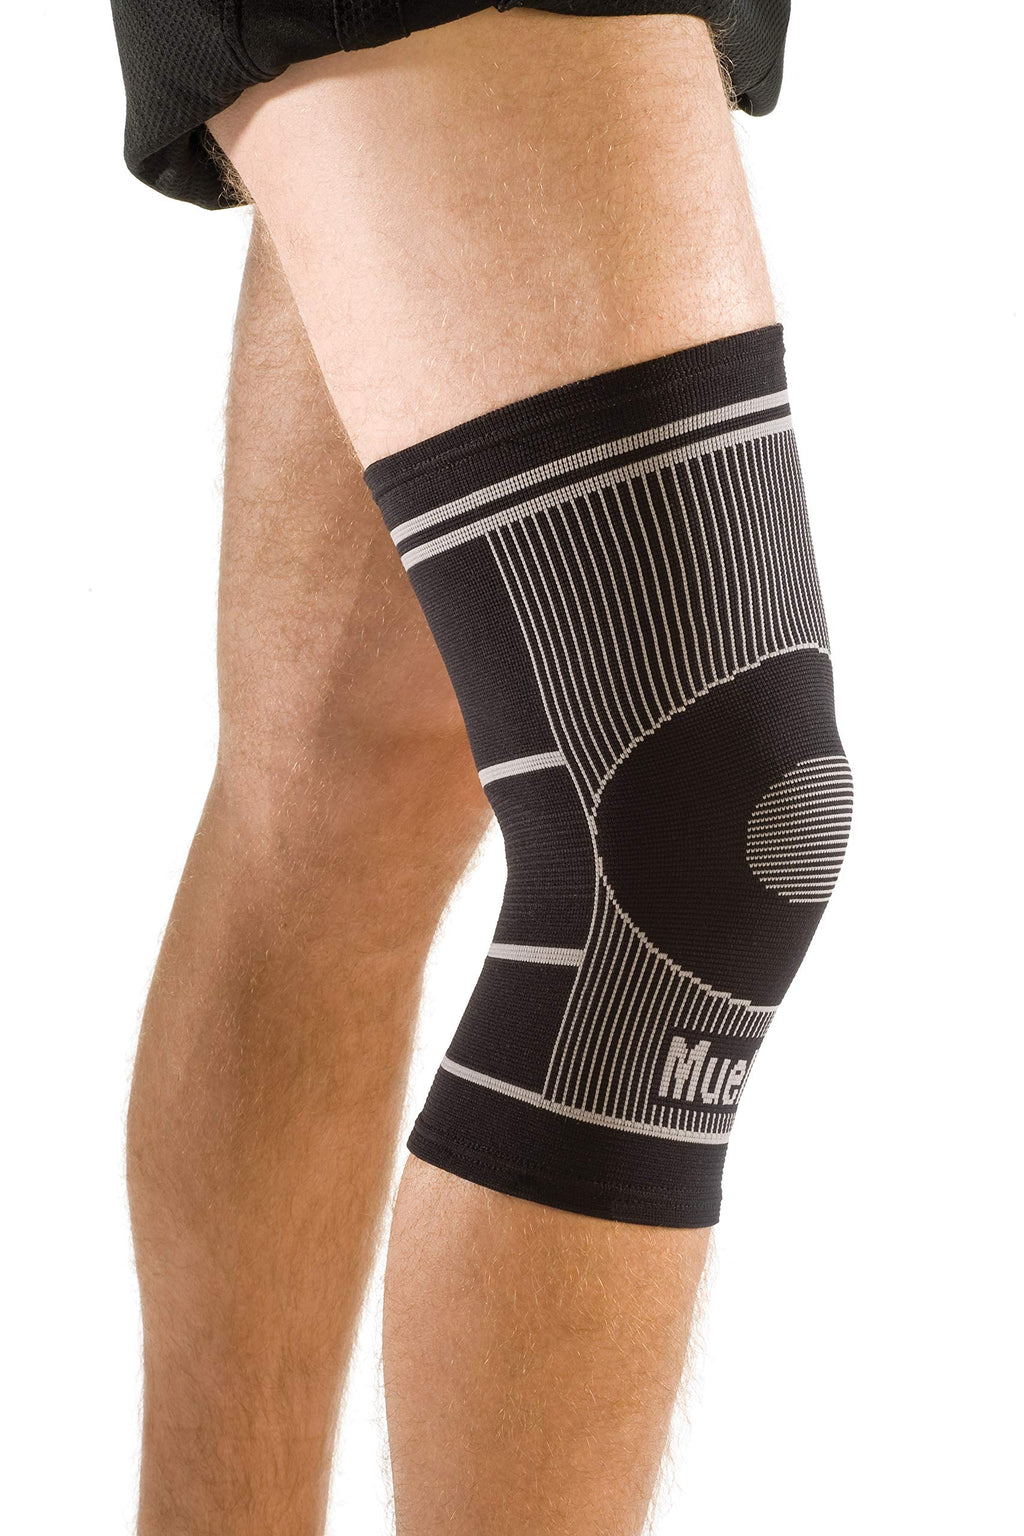 [Australia] - Mueller Sports Medicine 4-Way Stretch Knee Support Sleeve, For Men and Women, Black, L/XL 